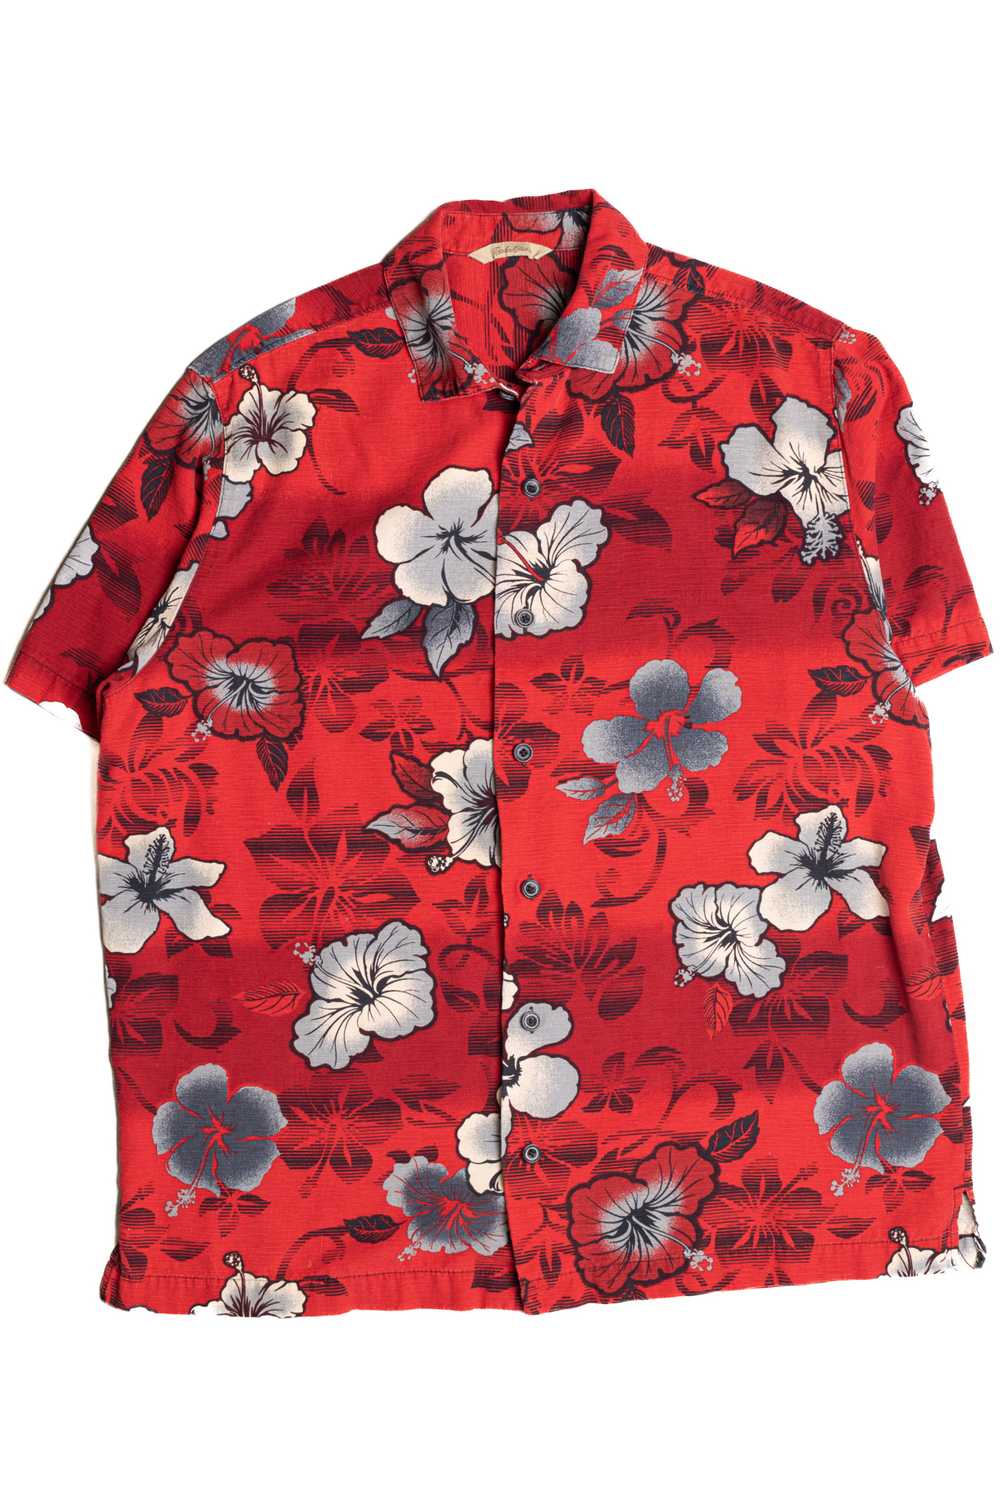 Paradise Collection Hawaiian Shirt 2272 - image 1